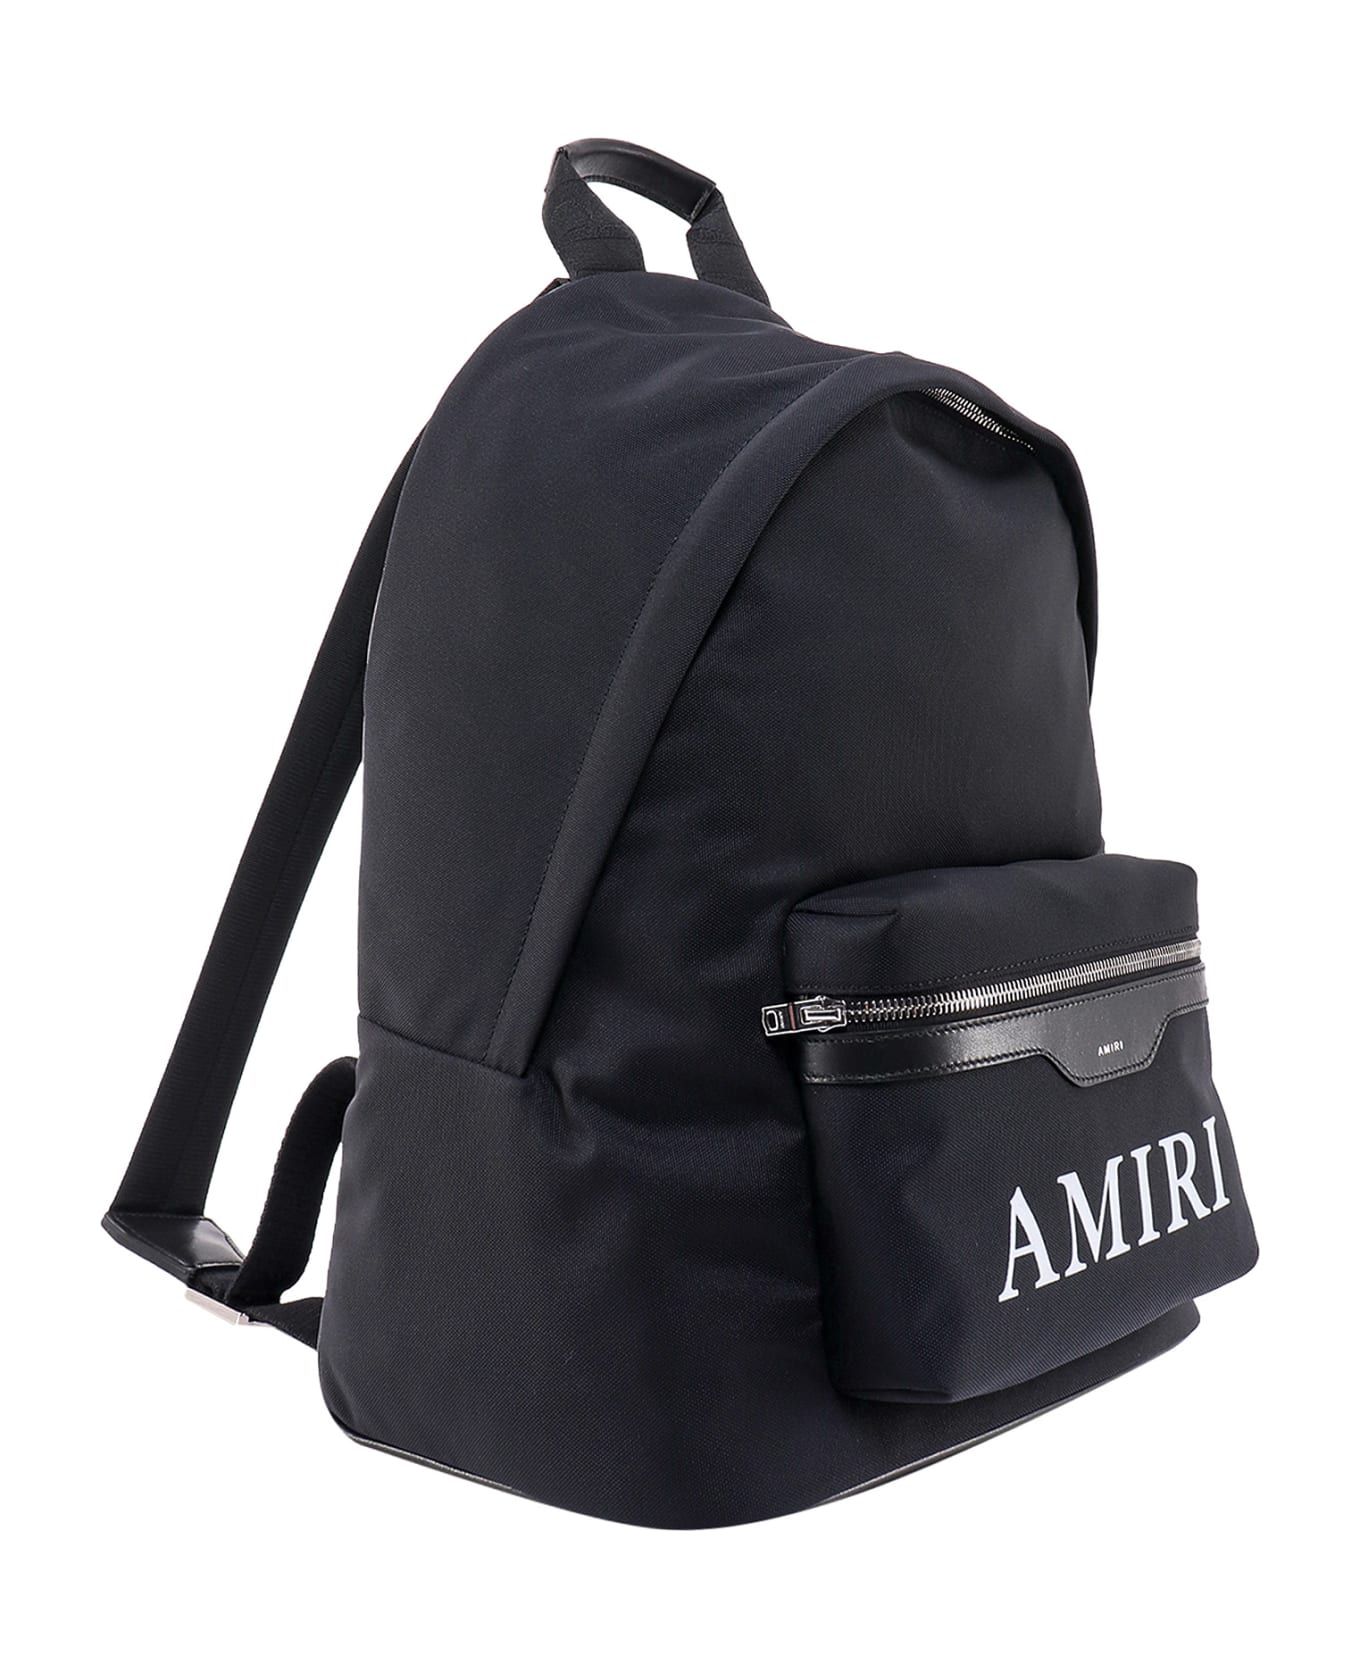 AMIRI Backpack - Black バックパック